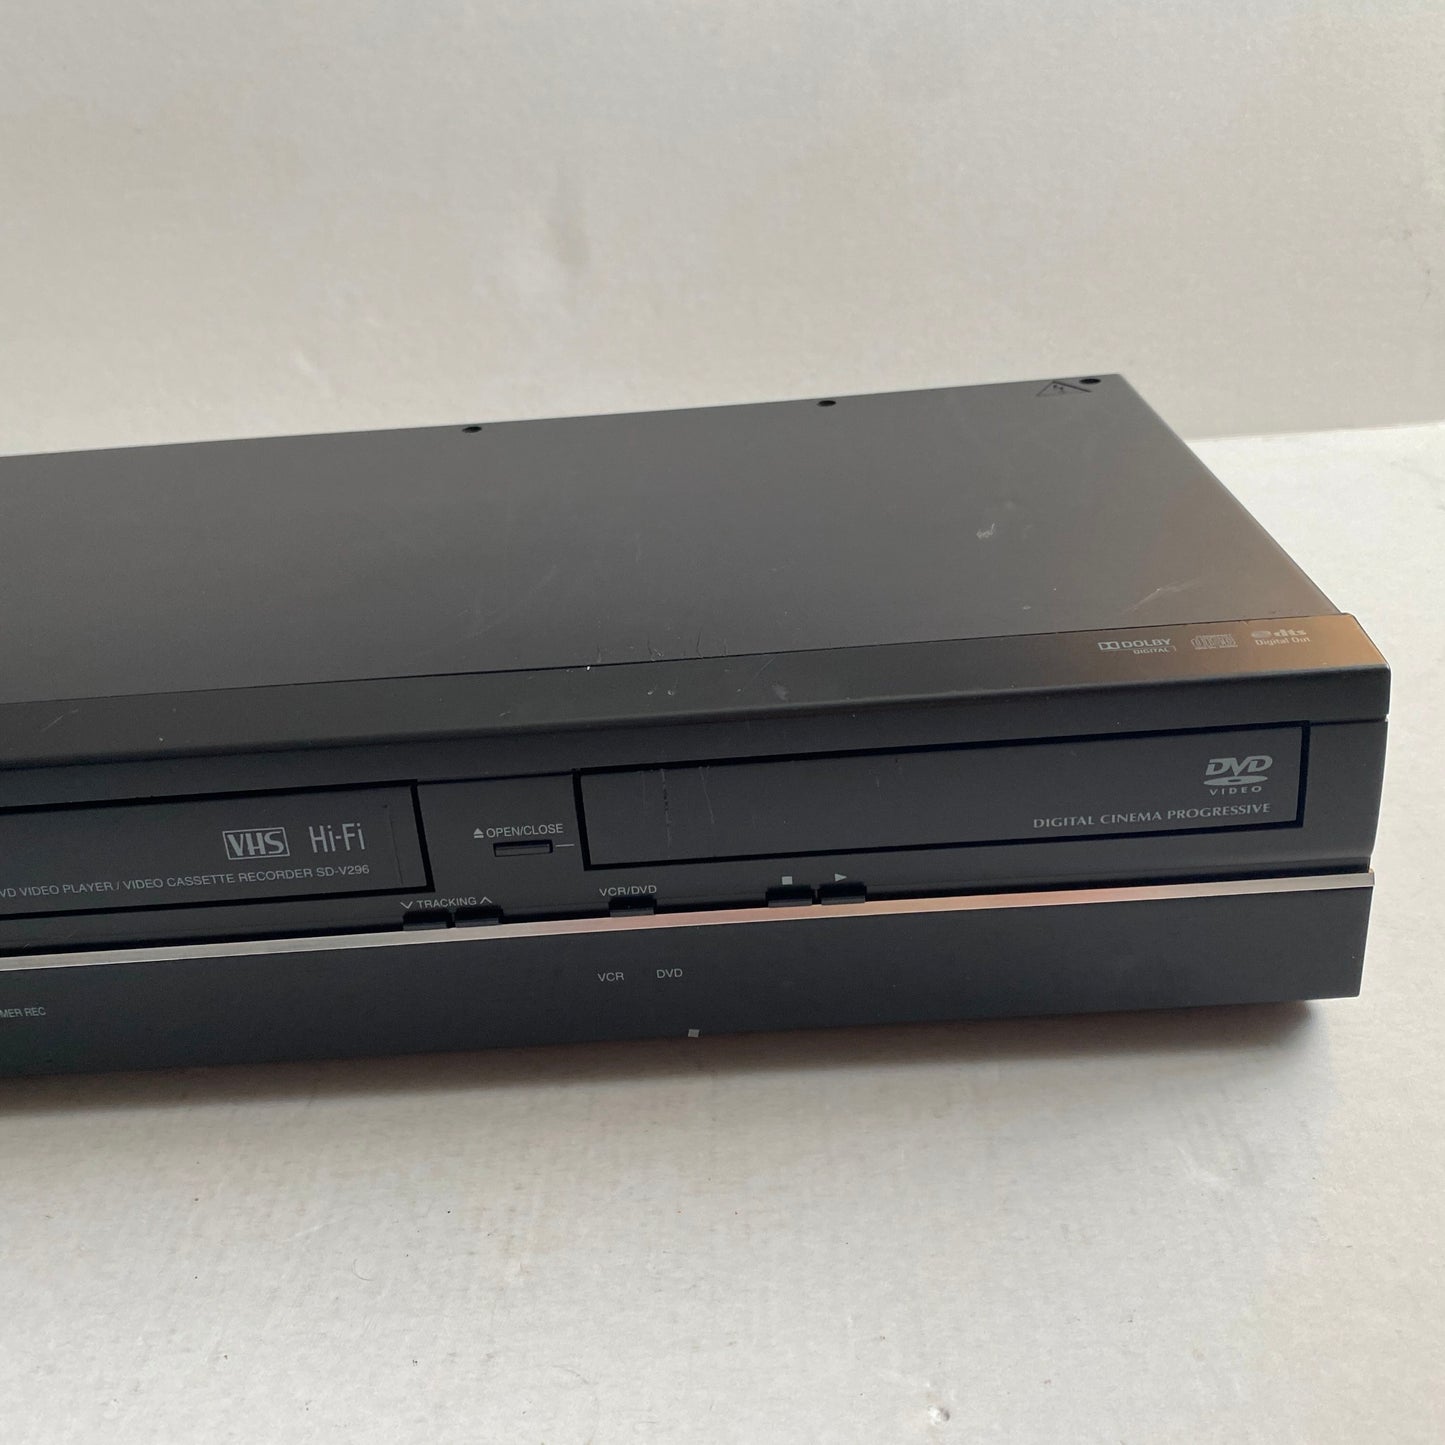 Toshiba VCR DVD Combo Player - SD-V296-K-TU